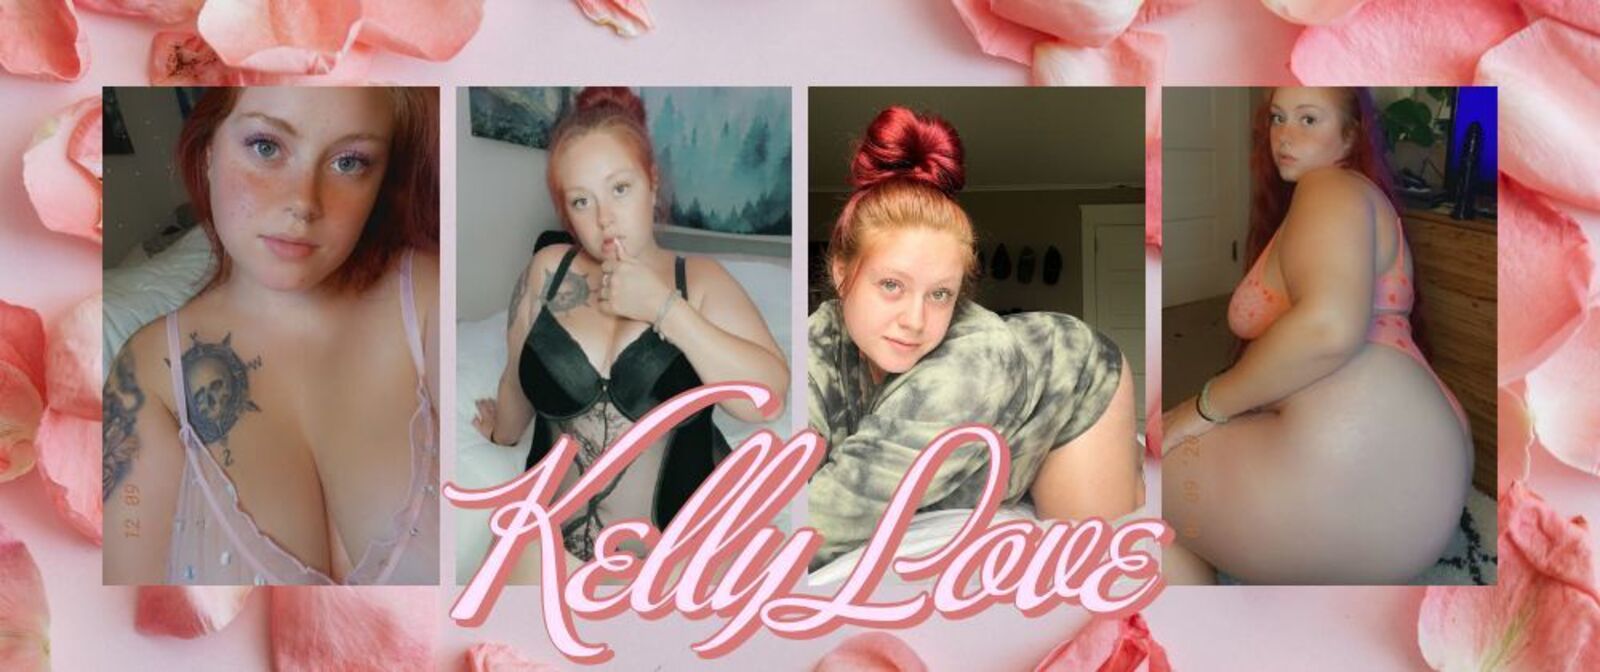 See KellyLove 🍓 profile